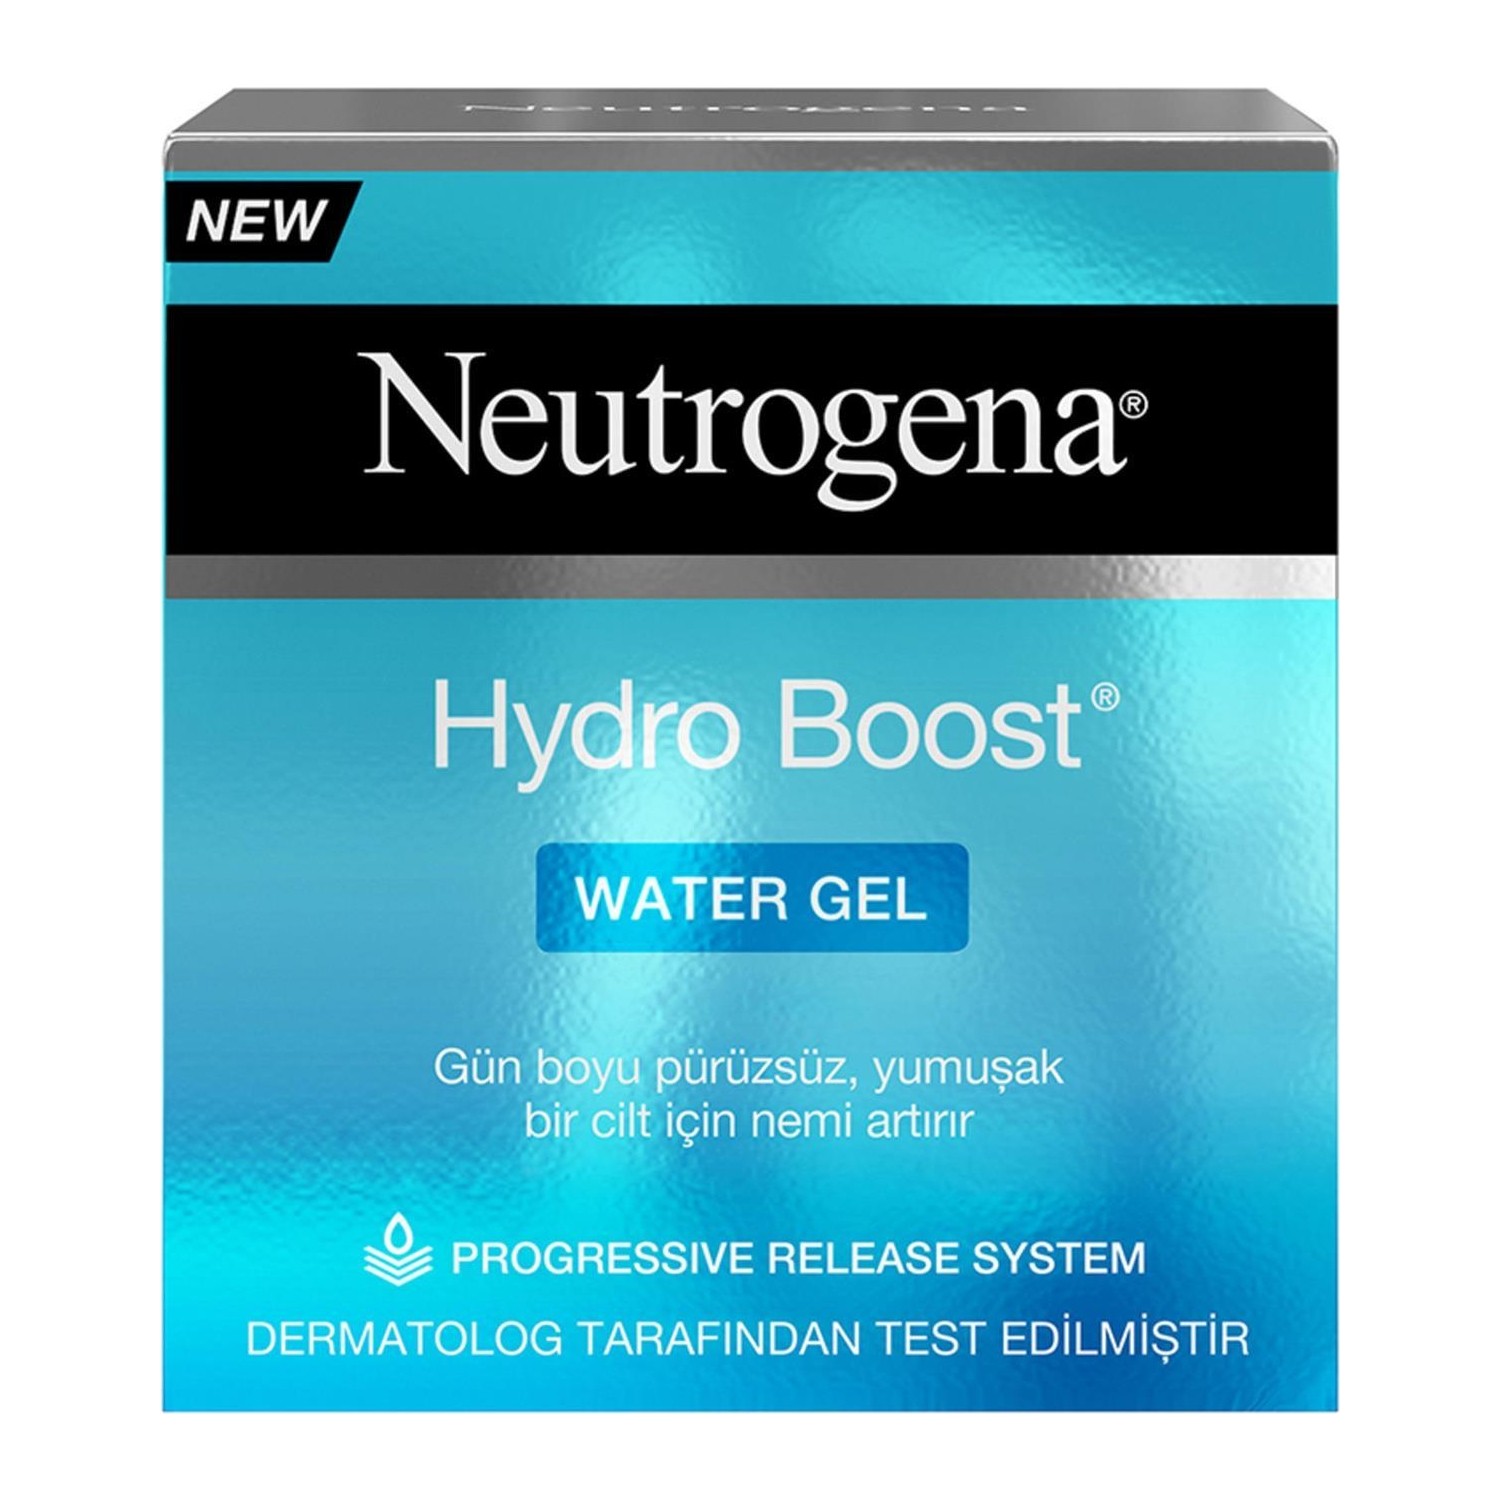 Gel neutrogena. Neutrogena крем Water Gel. Neutrogena Hydro Boost. Neutrogena Hydro Boost Gel-Cream. Neutrogena крем Hydro Boost Water Gel.